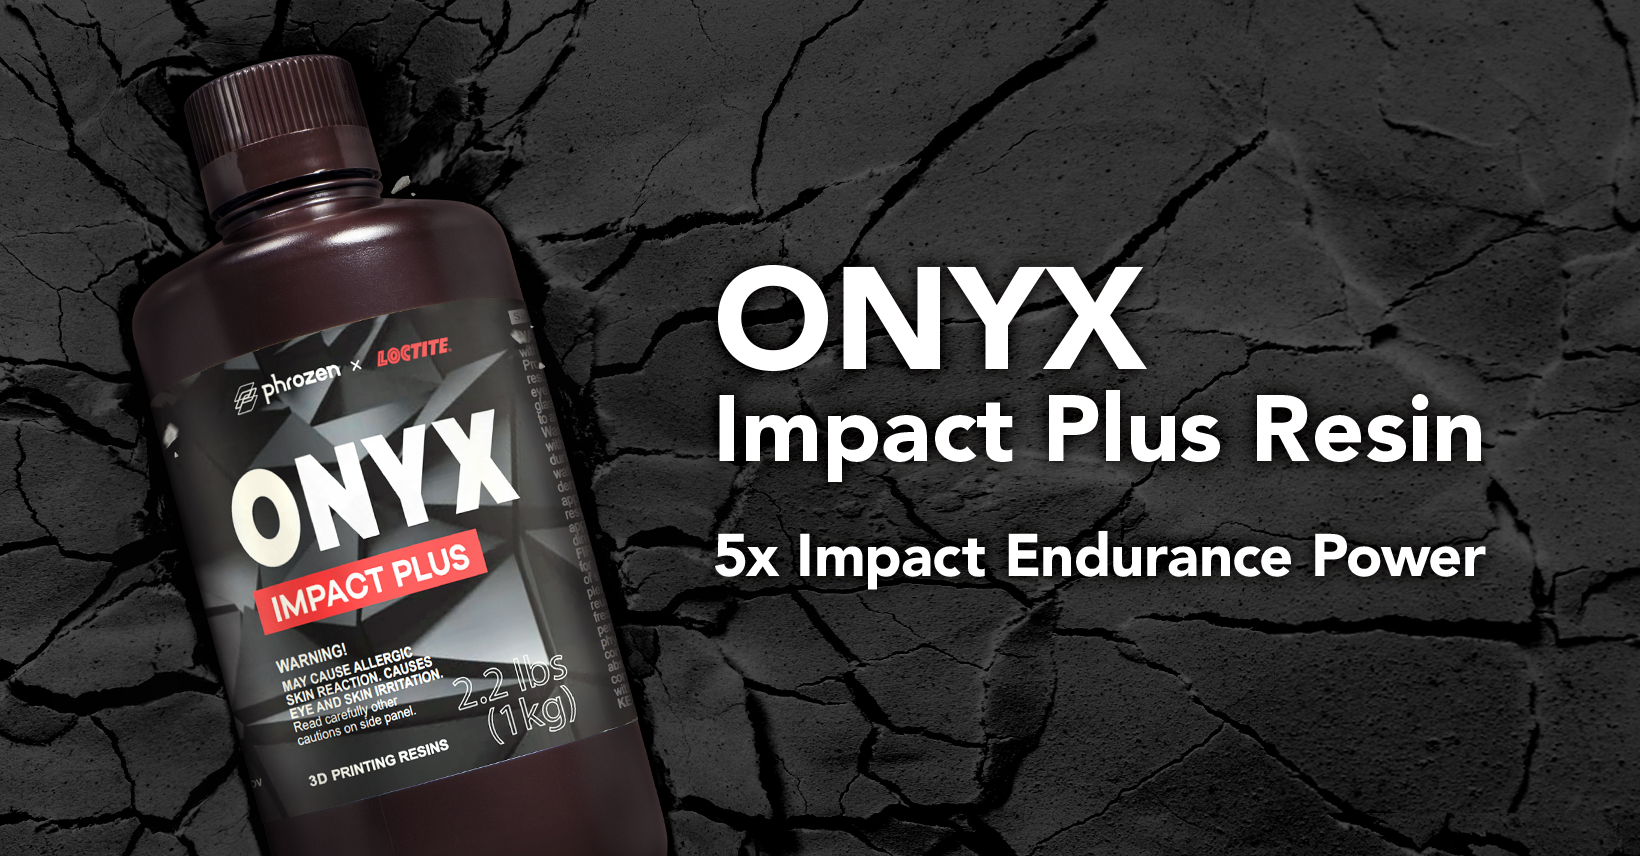 ONYX Impact Plus Resin